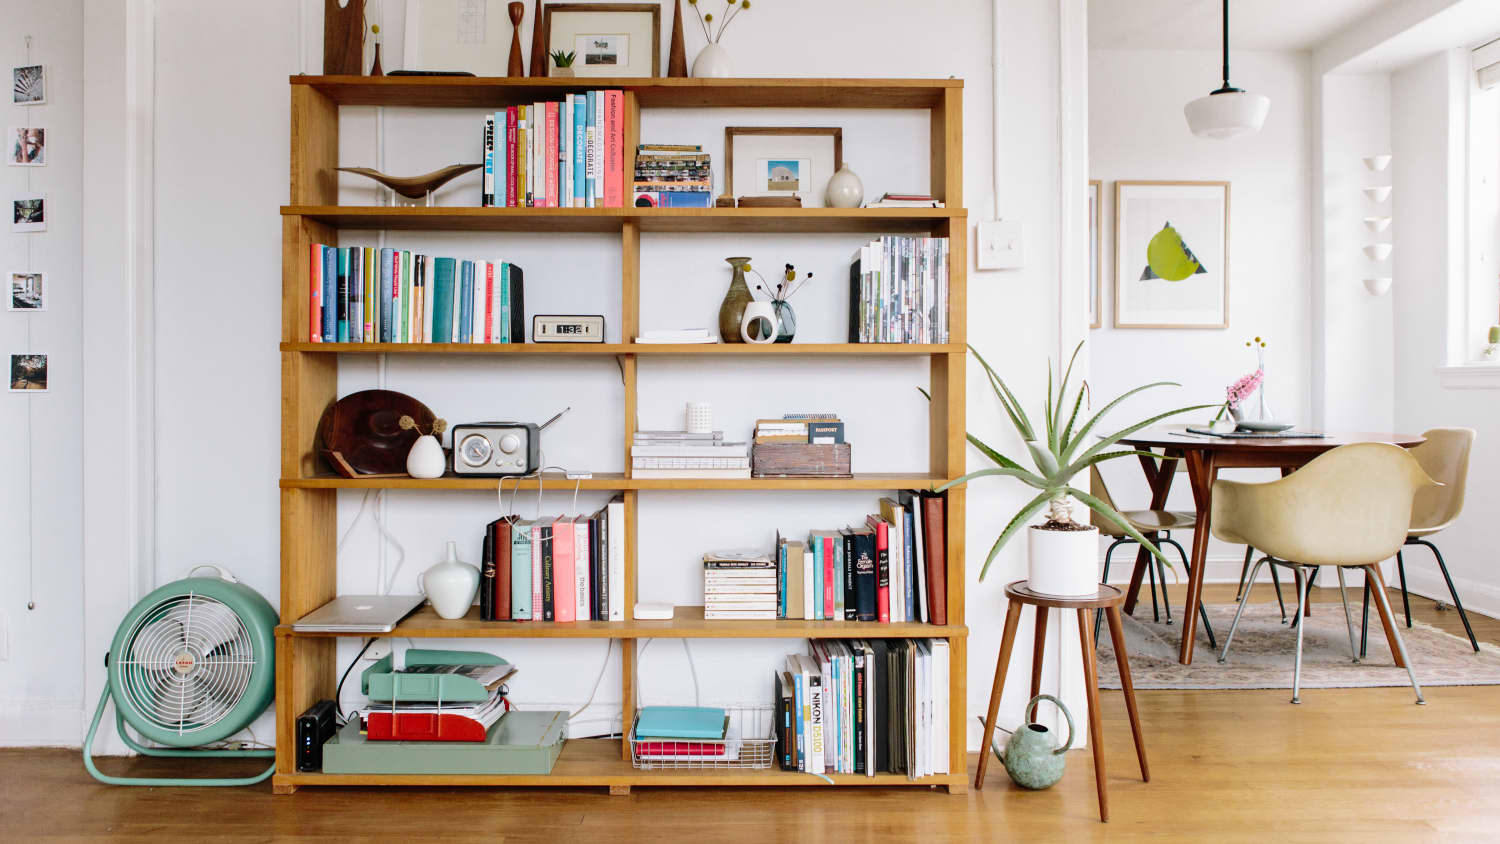 Set Books Box Fashion Collection Complete Hardcover Home Decor Interior  Accent